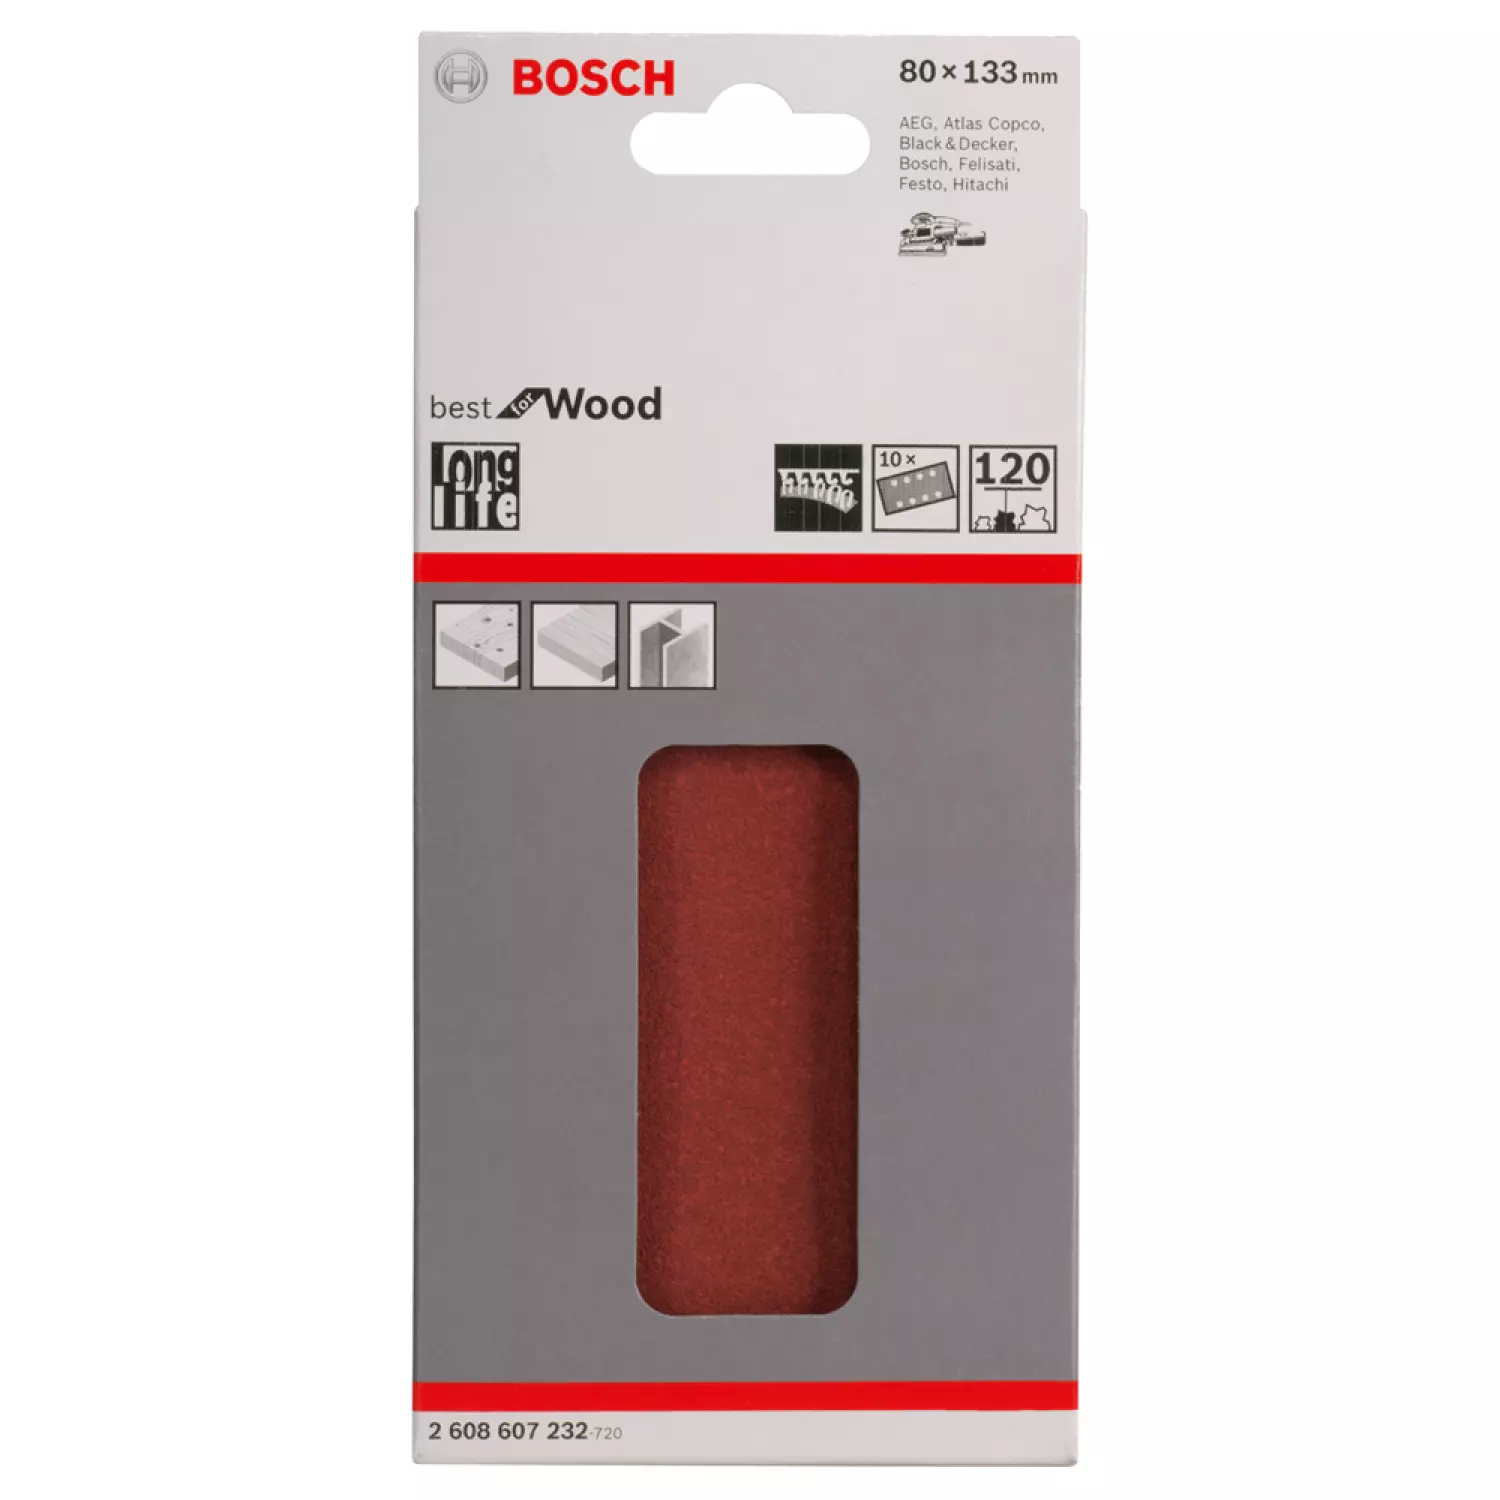 Bosch GSS 160-1 A 3-in-1 Multischuurmachine in L-Boxx - 180W